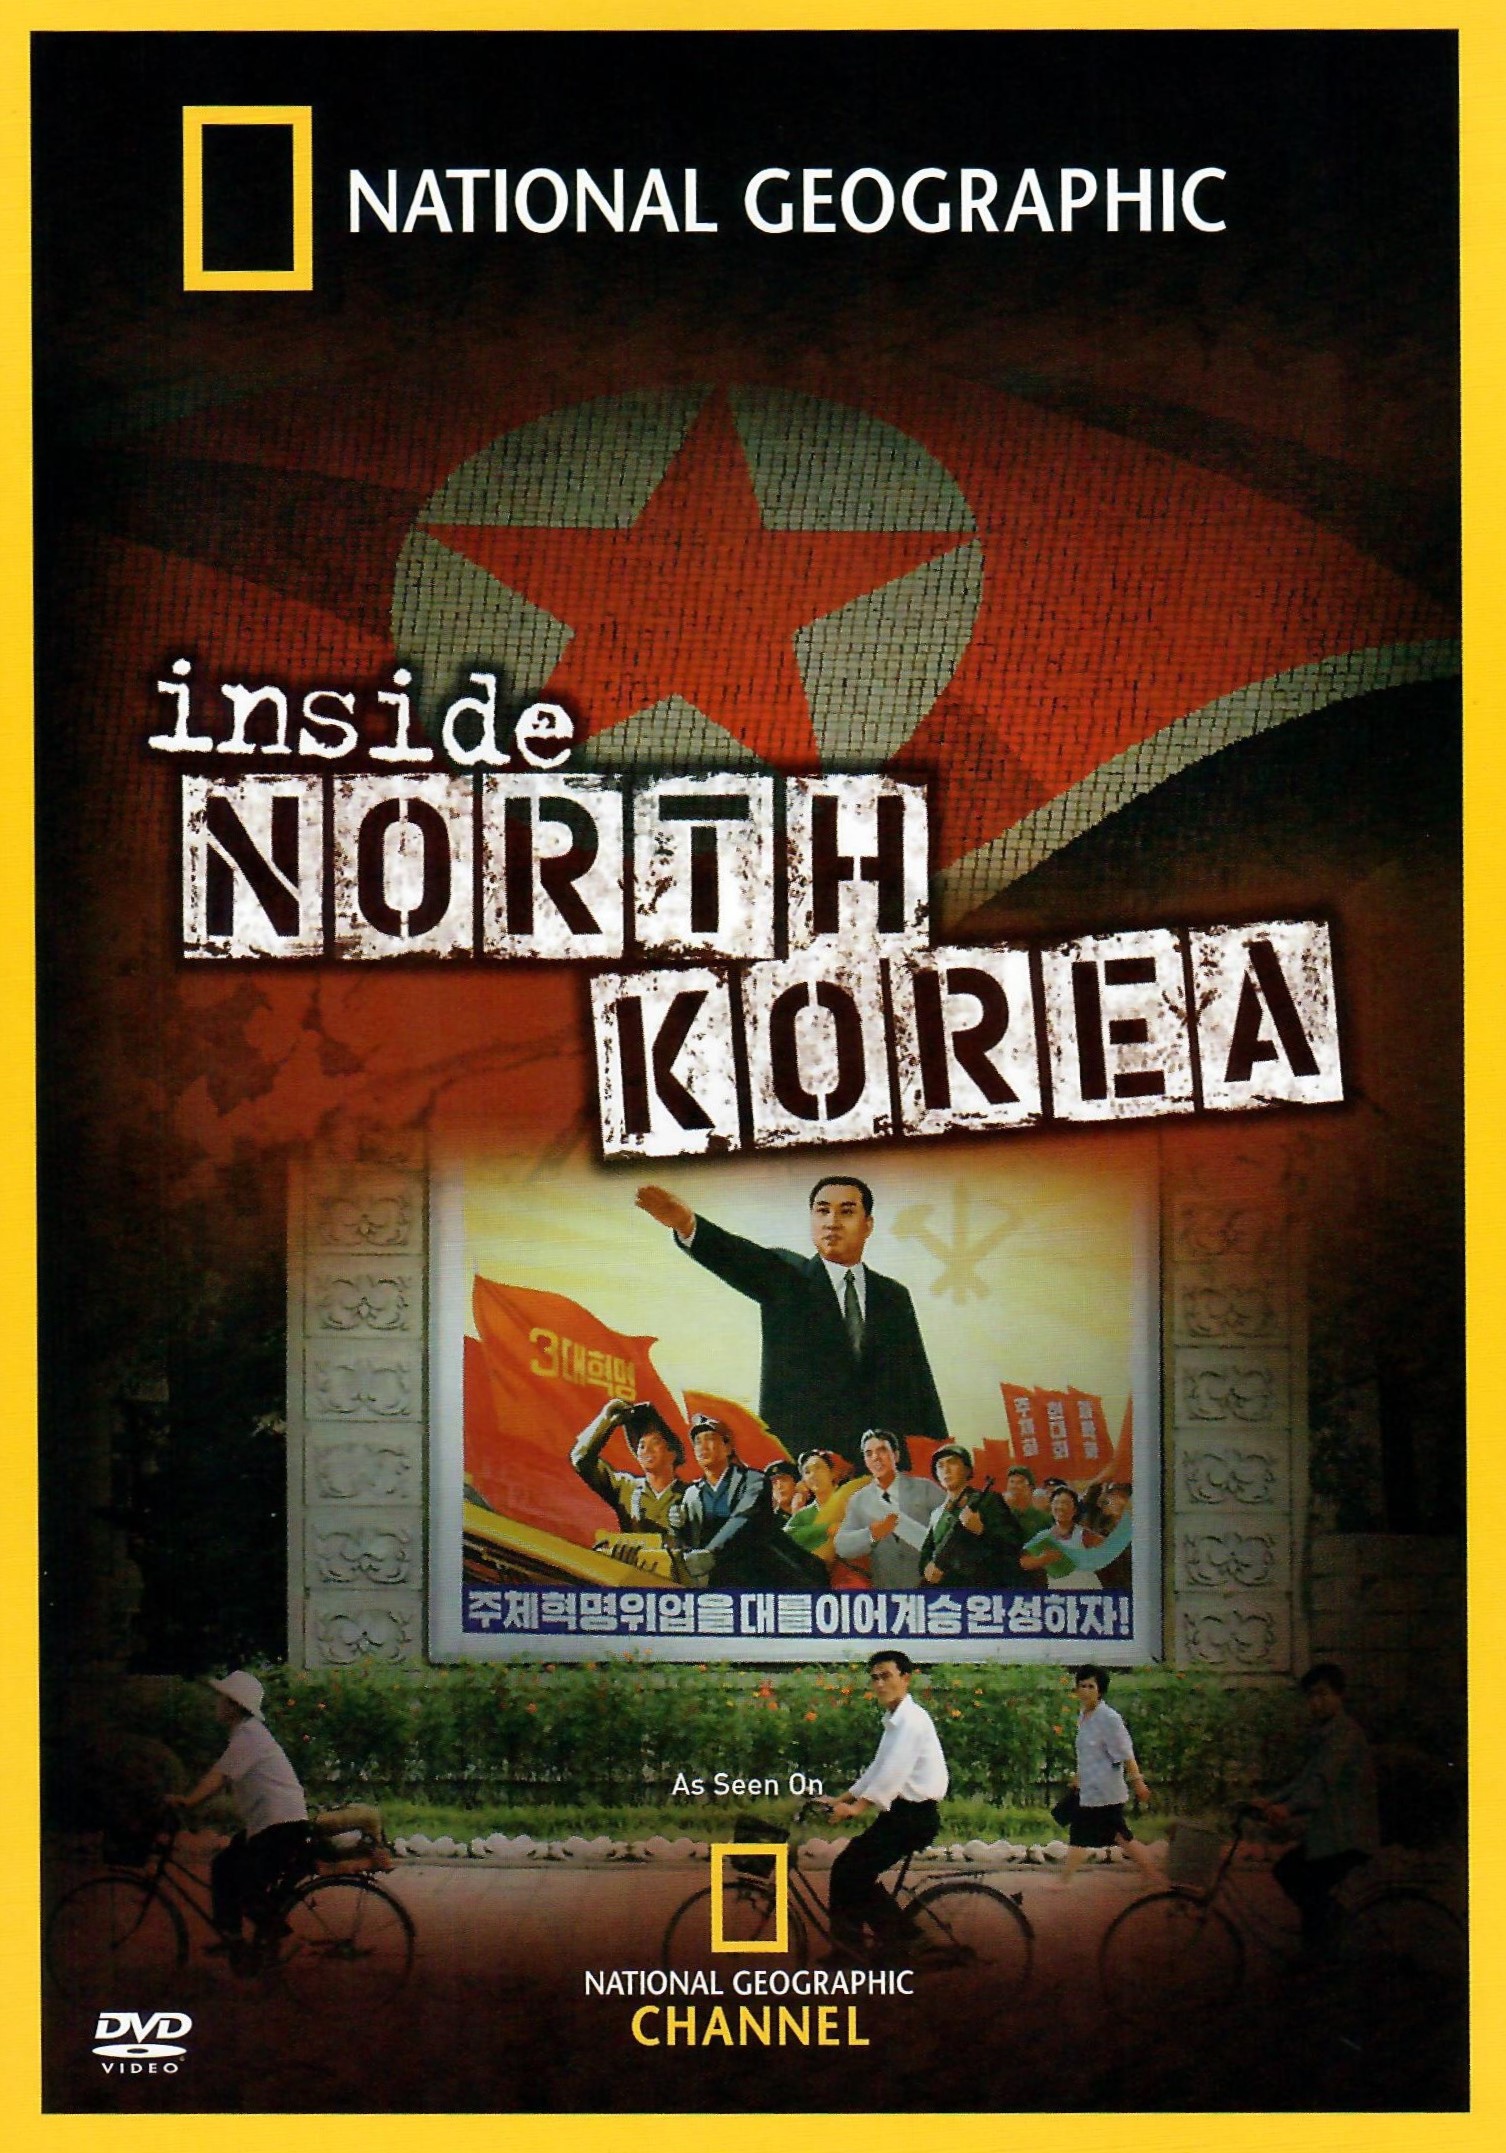 National Geographic: Inside North Korea (2006) Screenshot 3